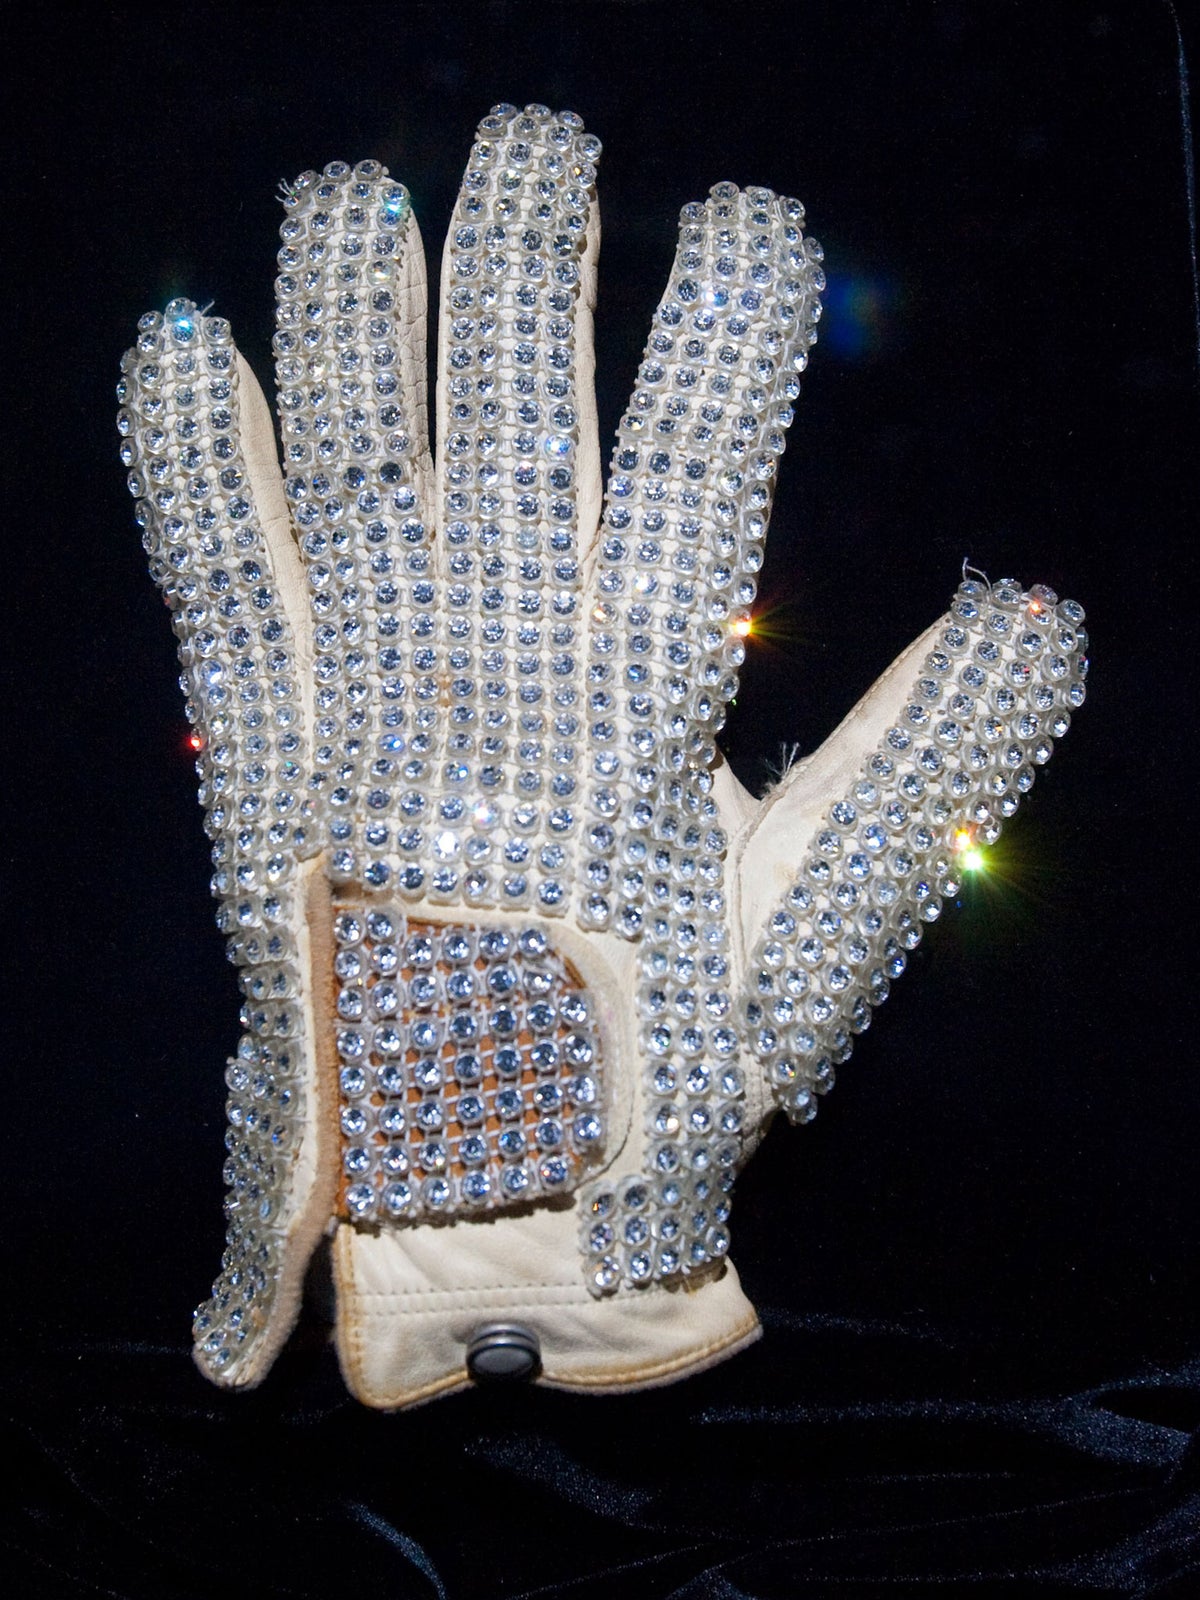 Michael Jackson's white glove: Rhodri Marsden's Interesting Objects No.105, The Independent